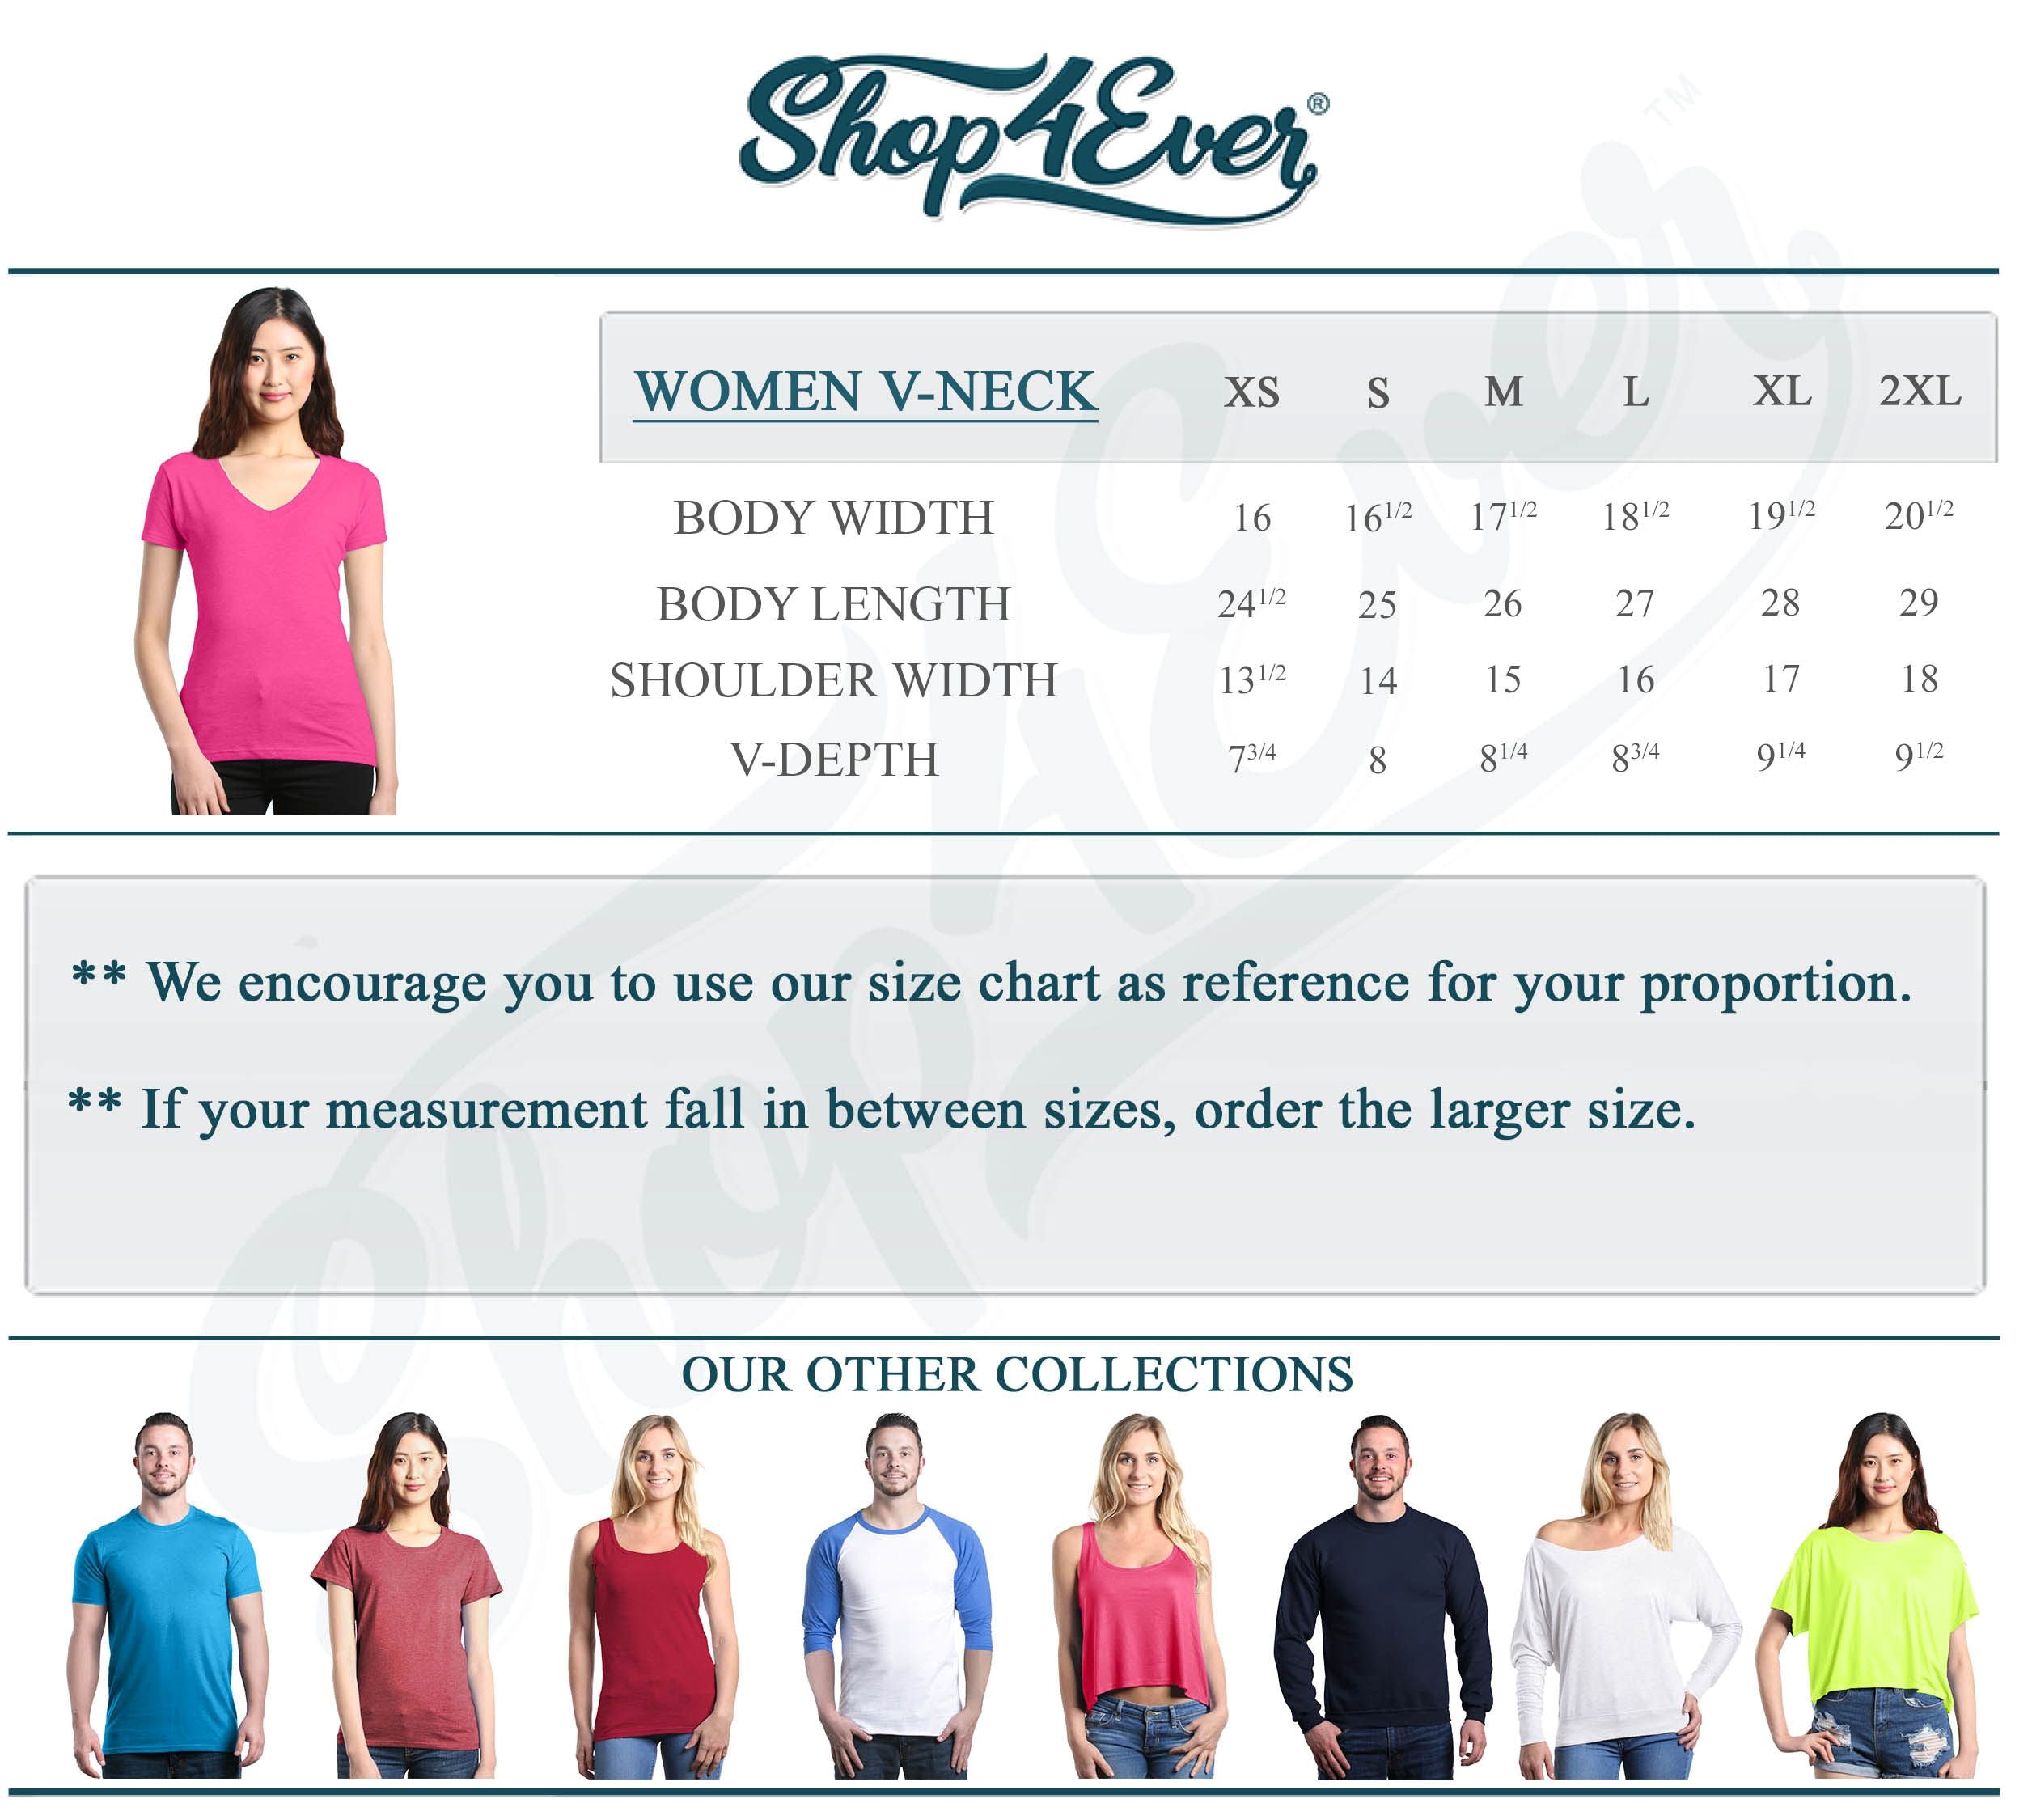 Canada White Women's V-Neck T-Shirt Slim FIT